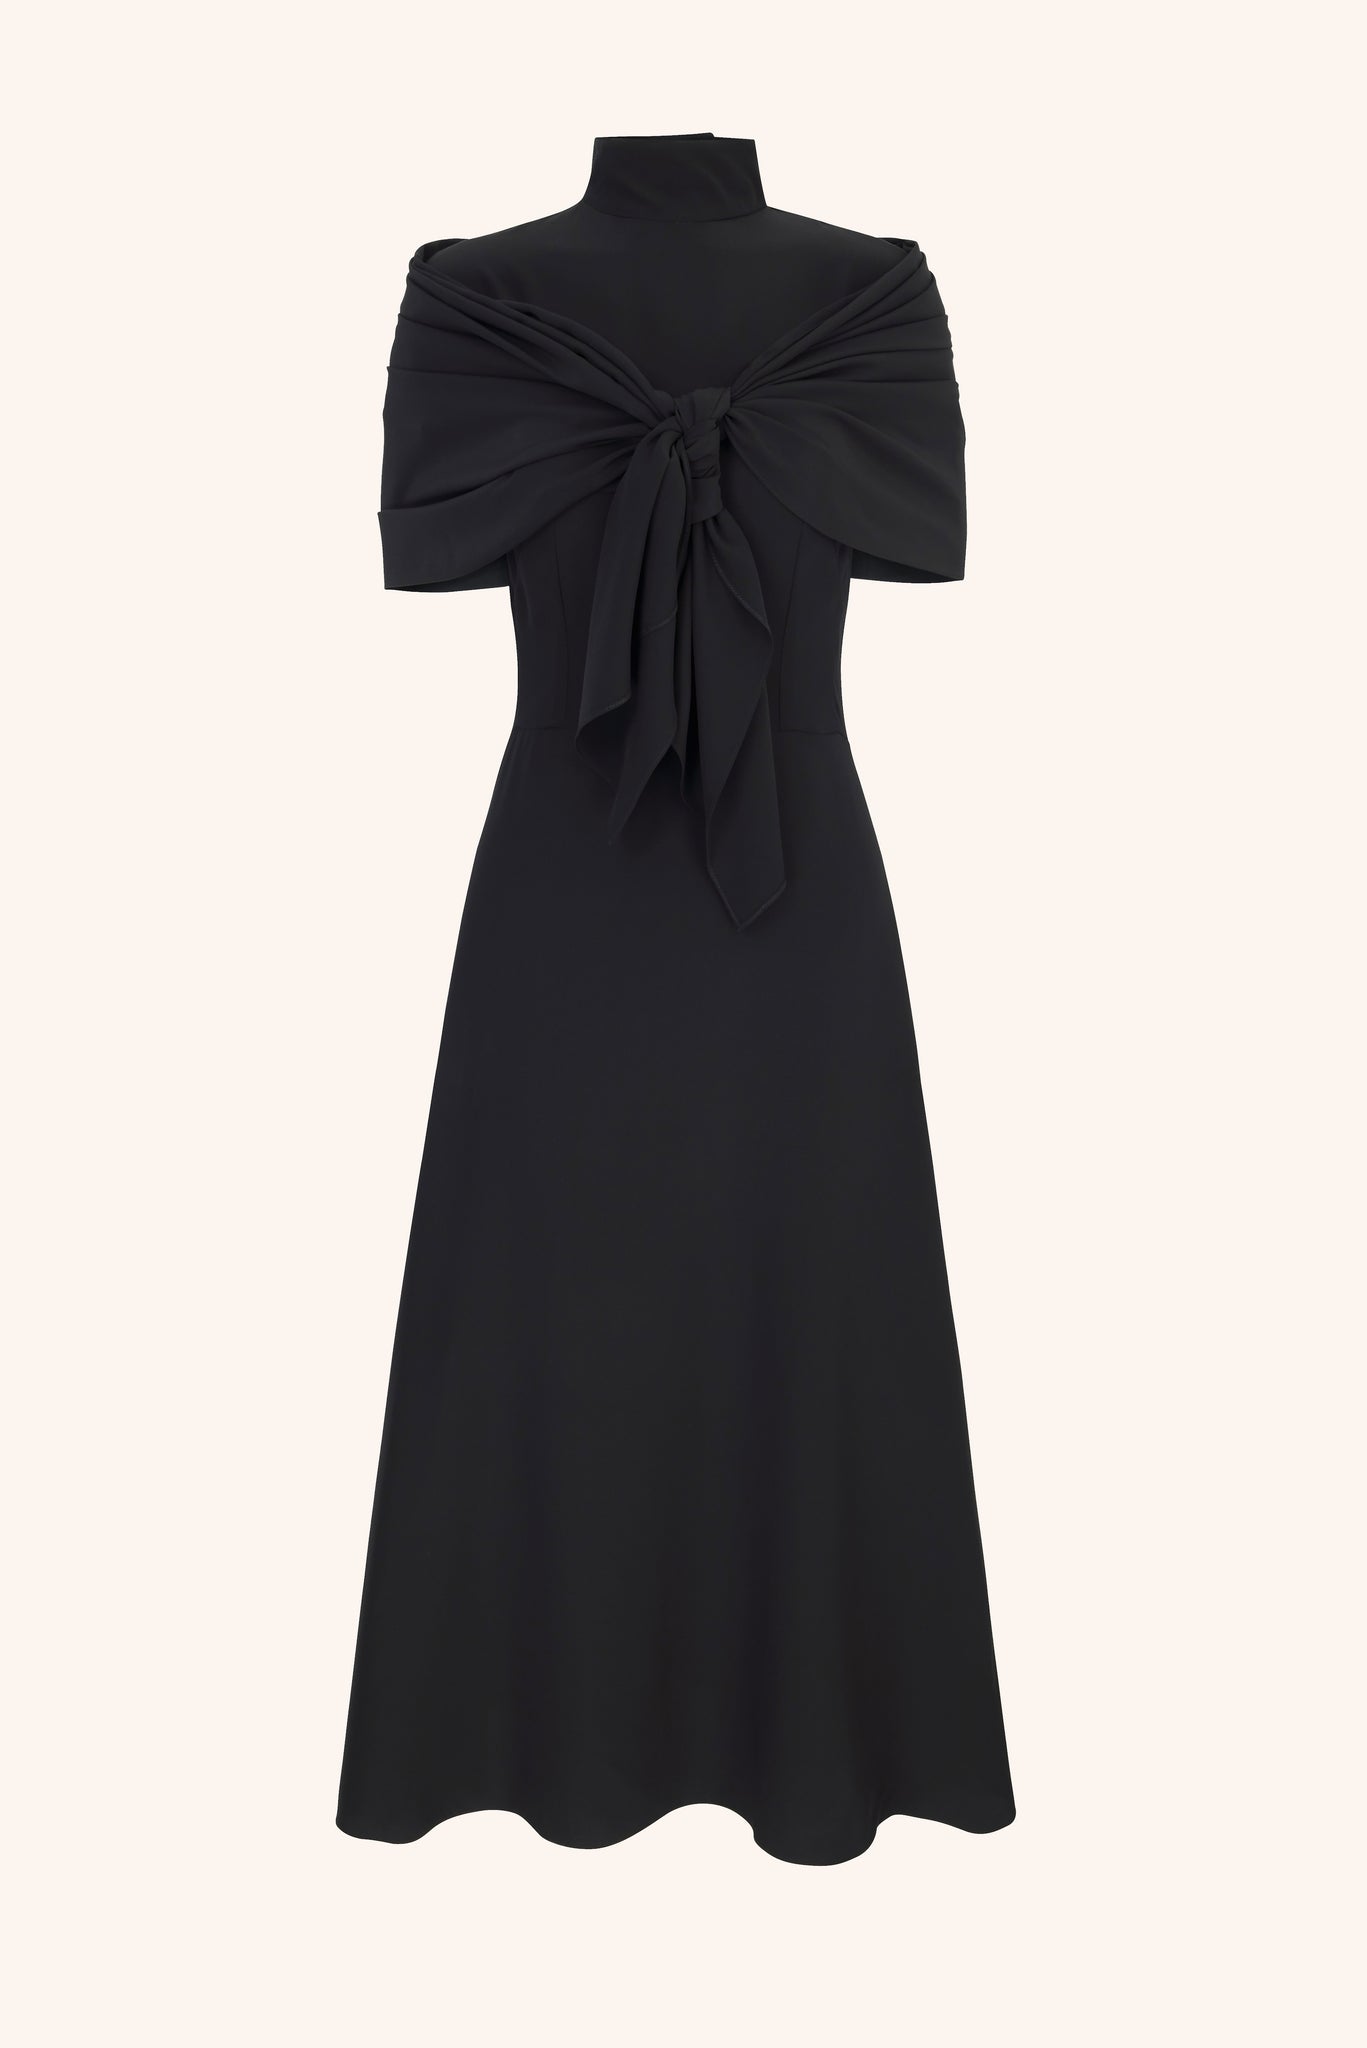 Angelique Dress in Black Silk